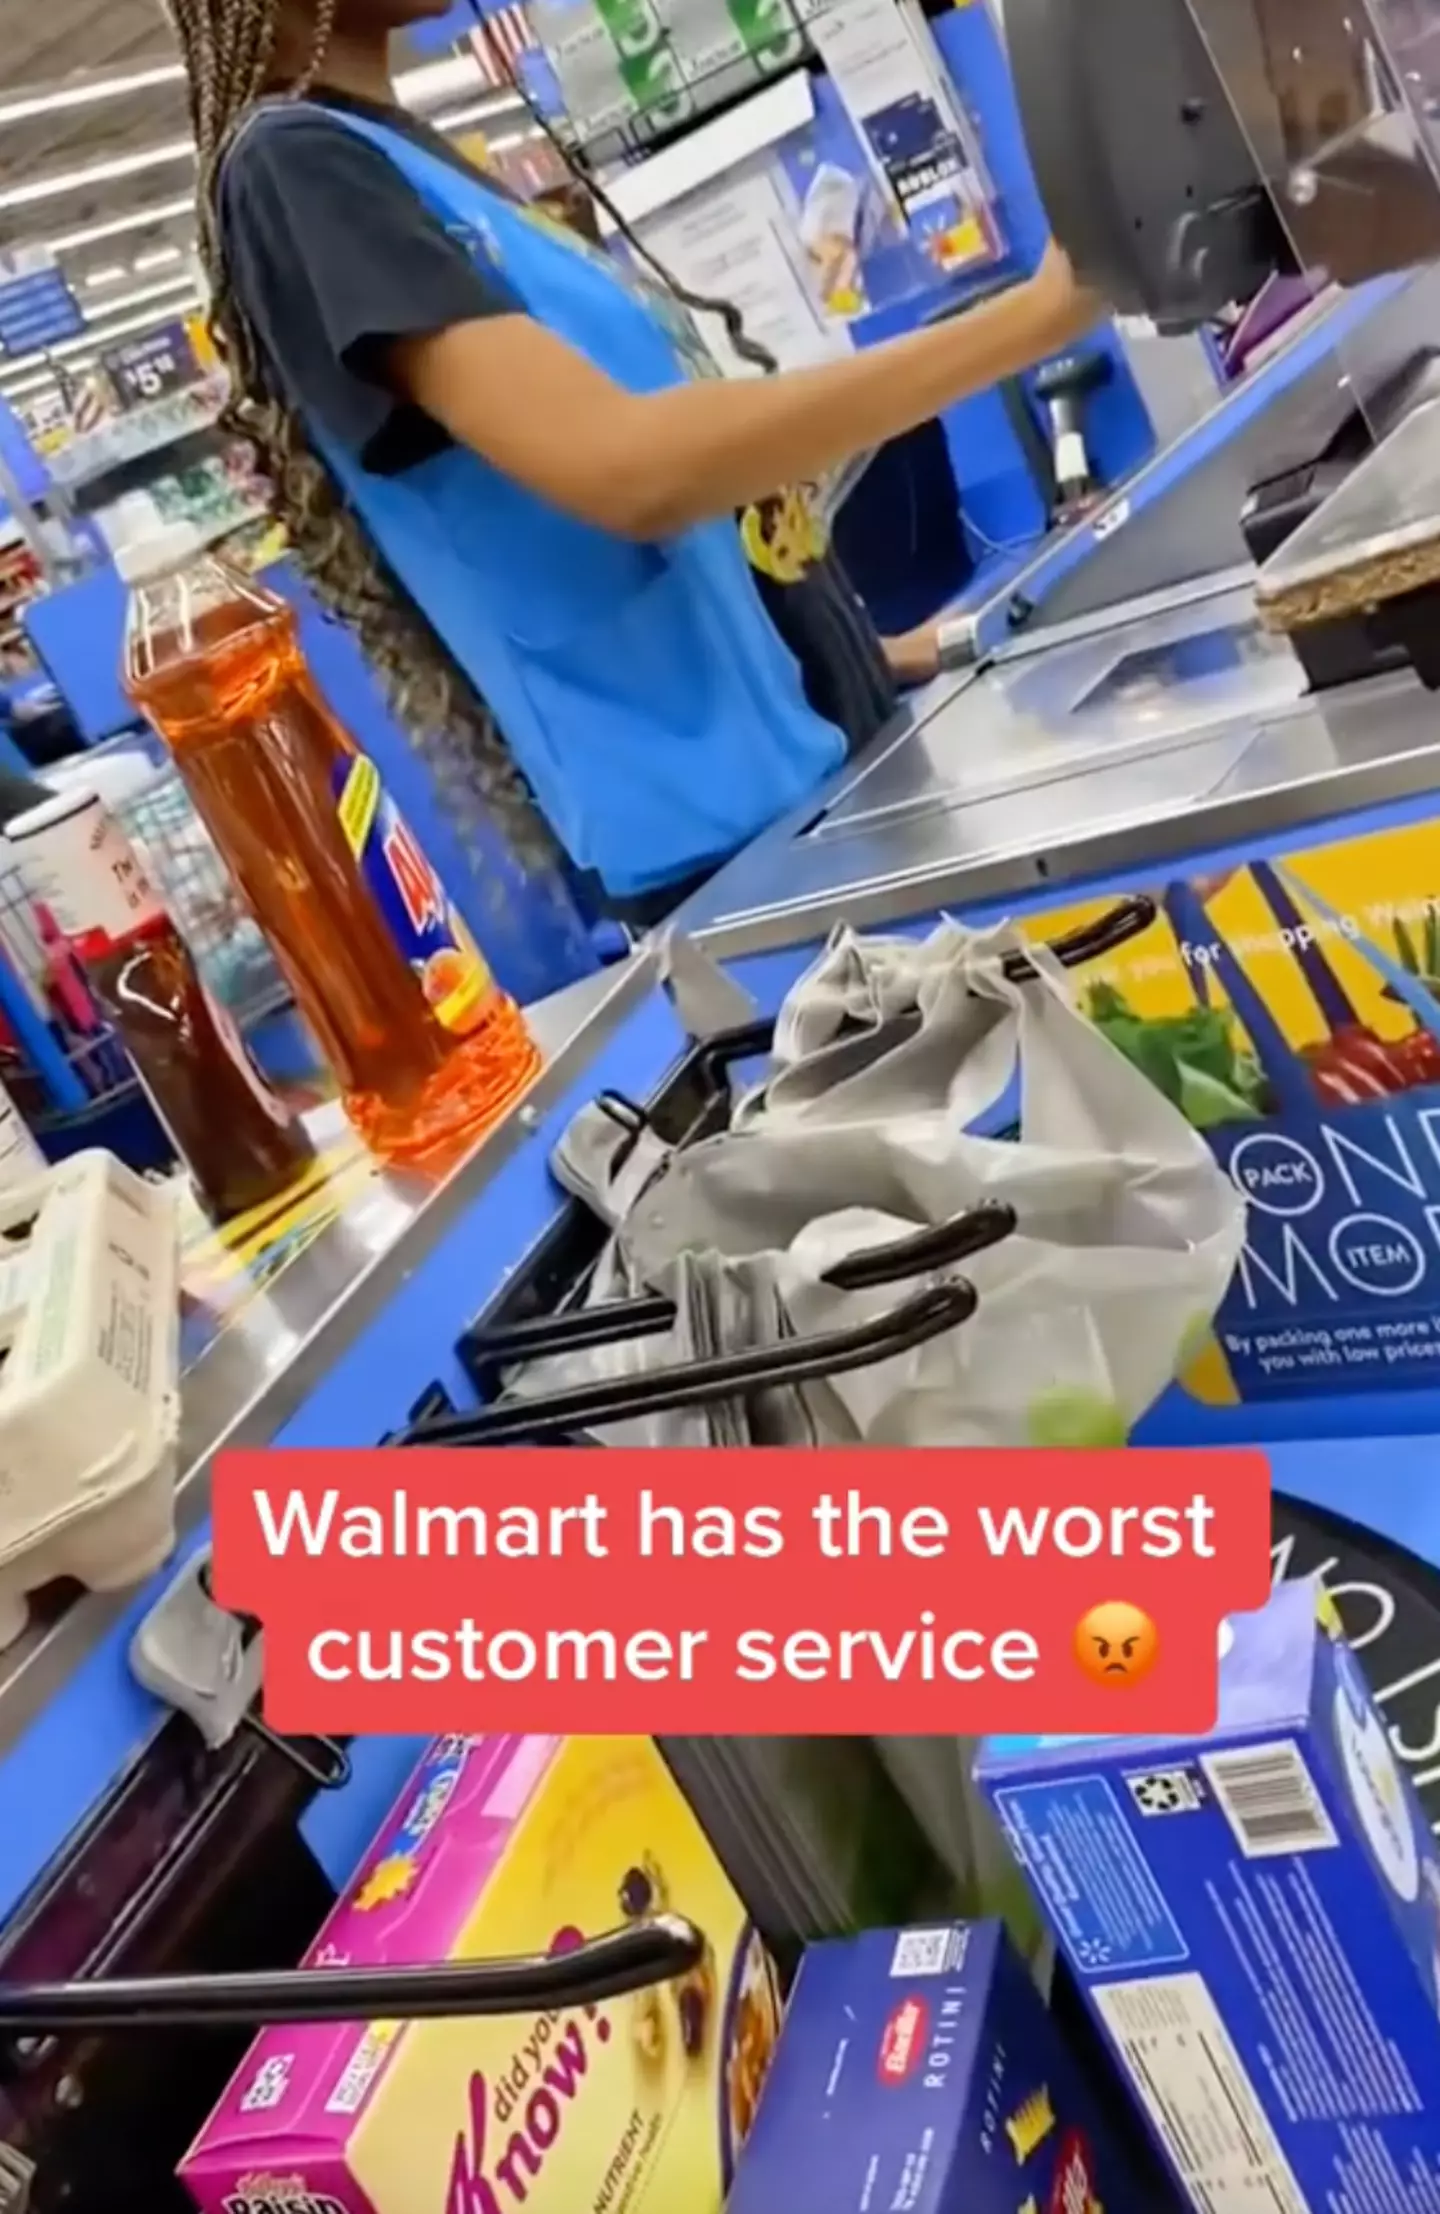 The shopper claimed Walmart has 'the worst customer service'.